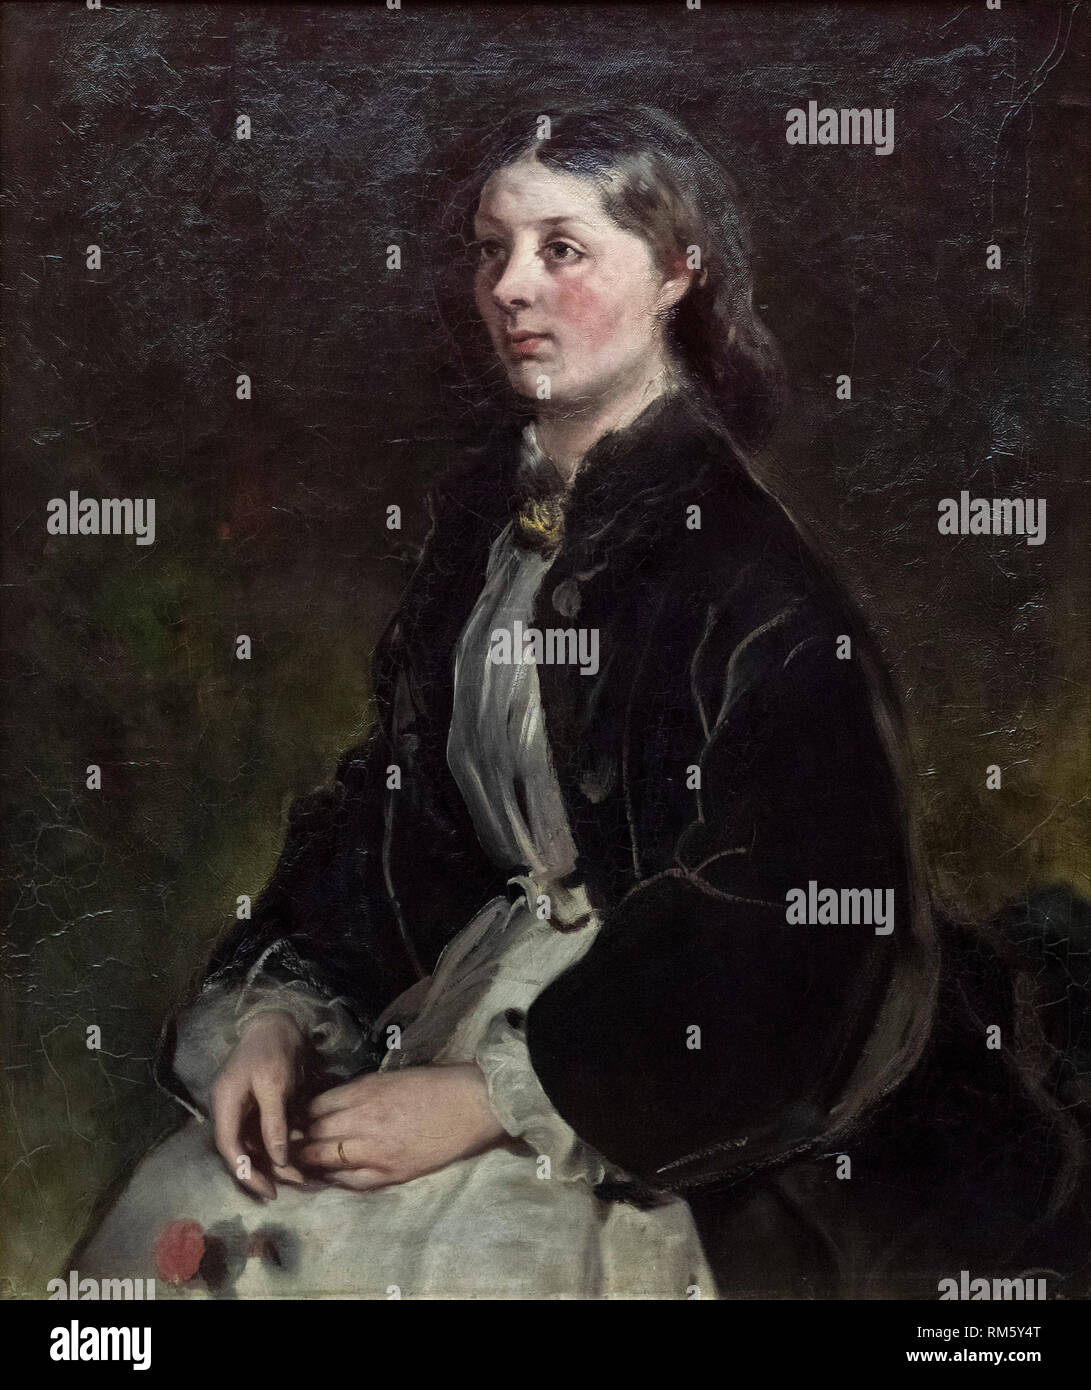 Ferdinand von Rayski (1806-1890), retrato de la Baronesa Christina von Schönberg, ca. 1864-1868. Alte Nationalgalerie, Berlín, Alemania. Foto de stock